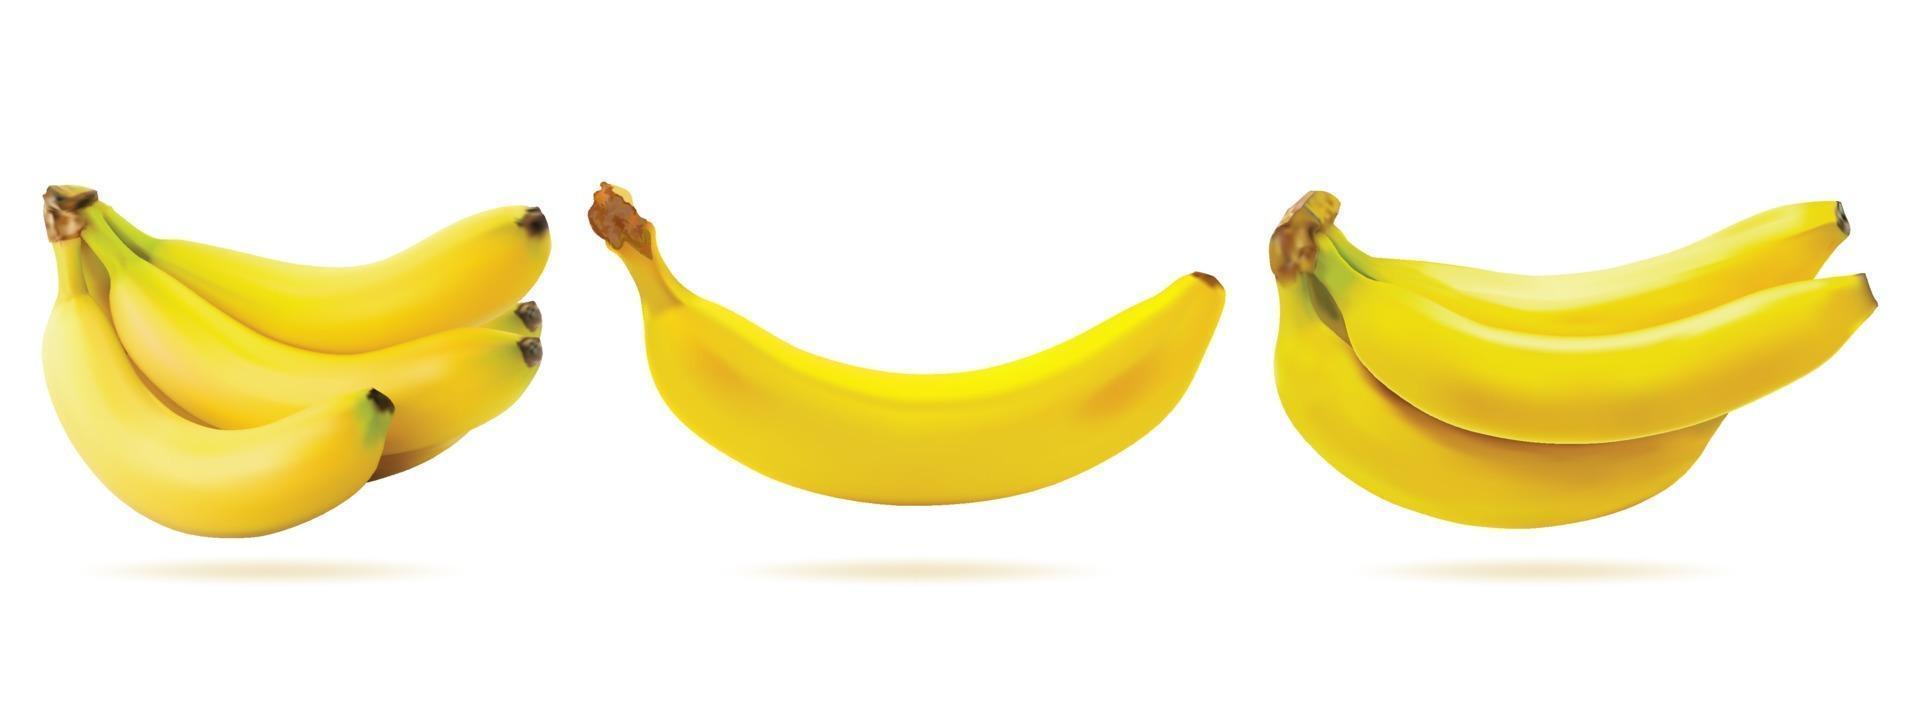 färsk bananfrukt isolerad på vit bakgrund. illustration realistisk vektor